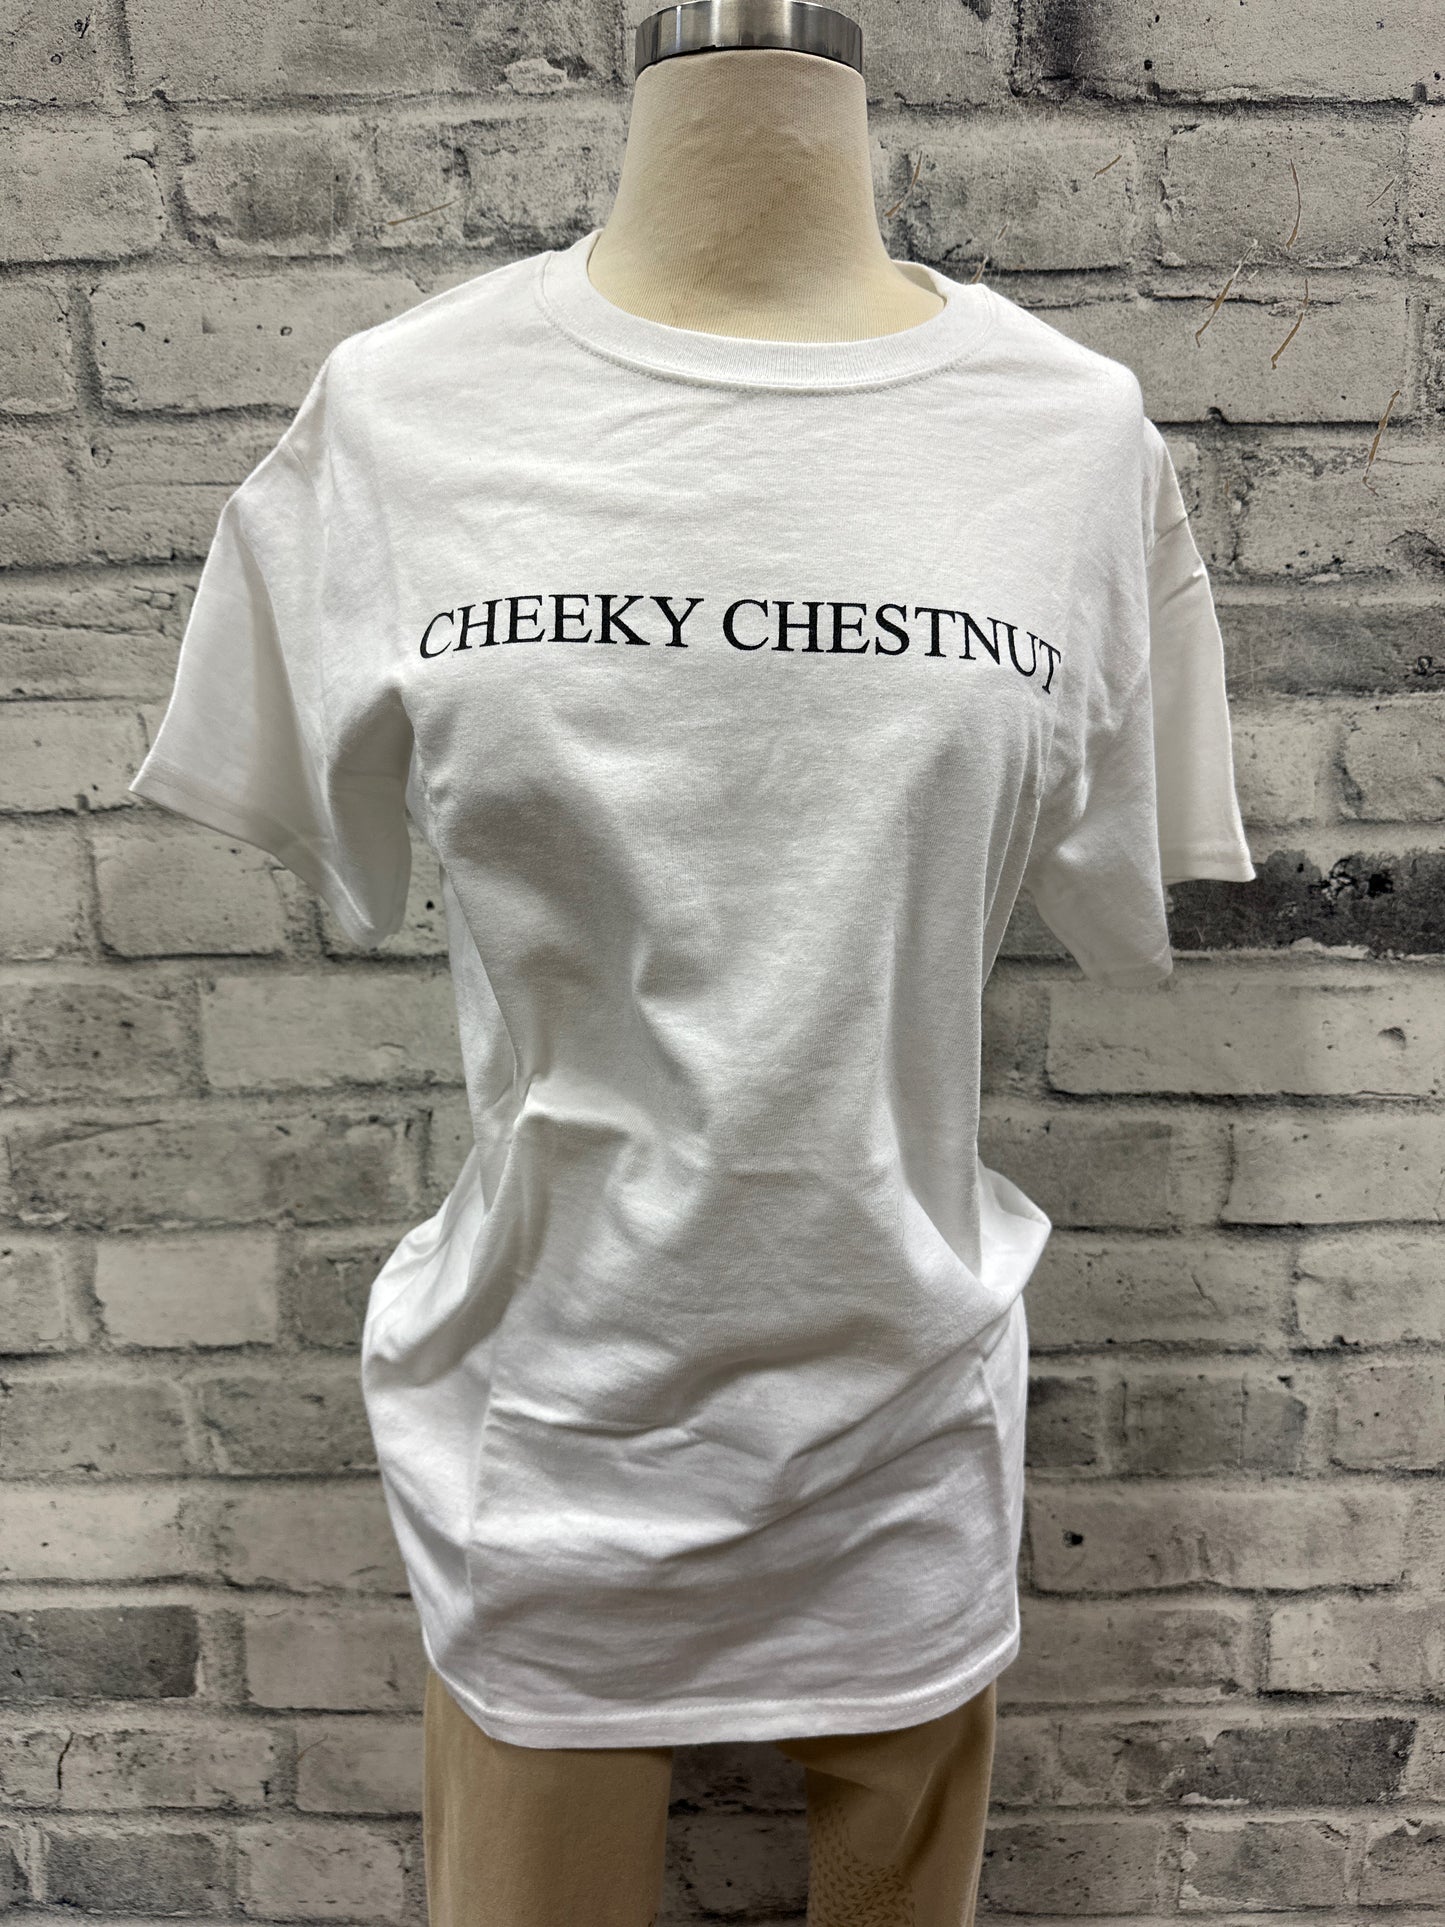 "Cheeky Chestnut" White/Black Unisex S